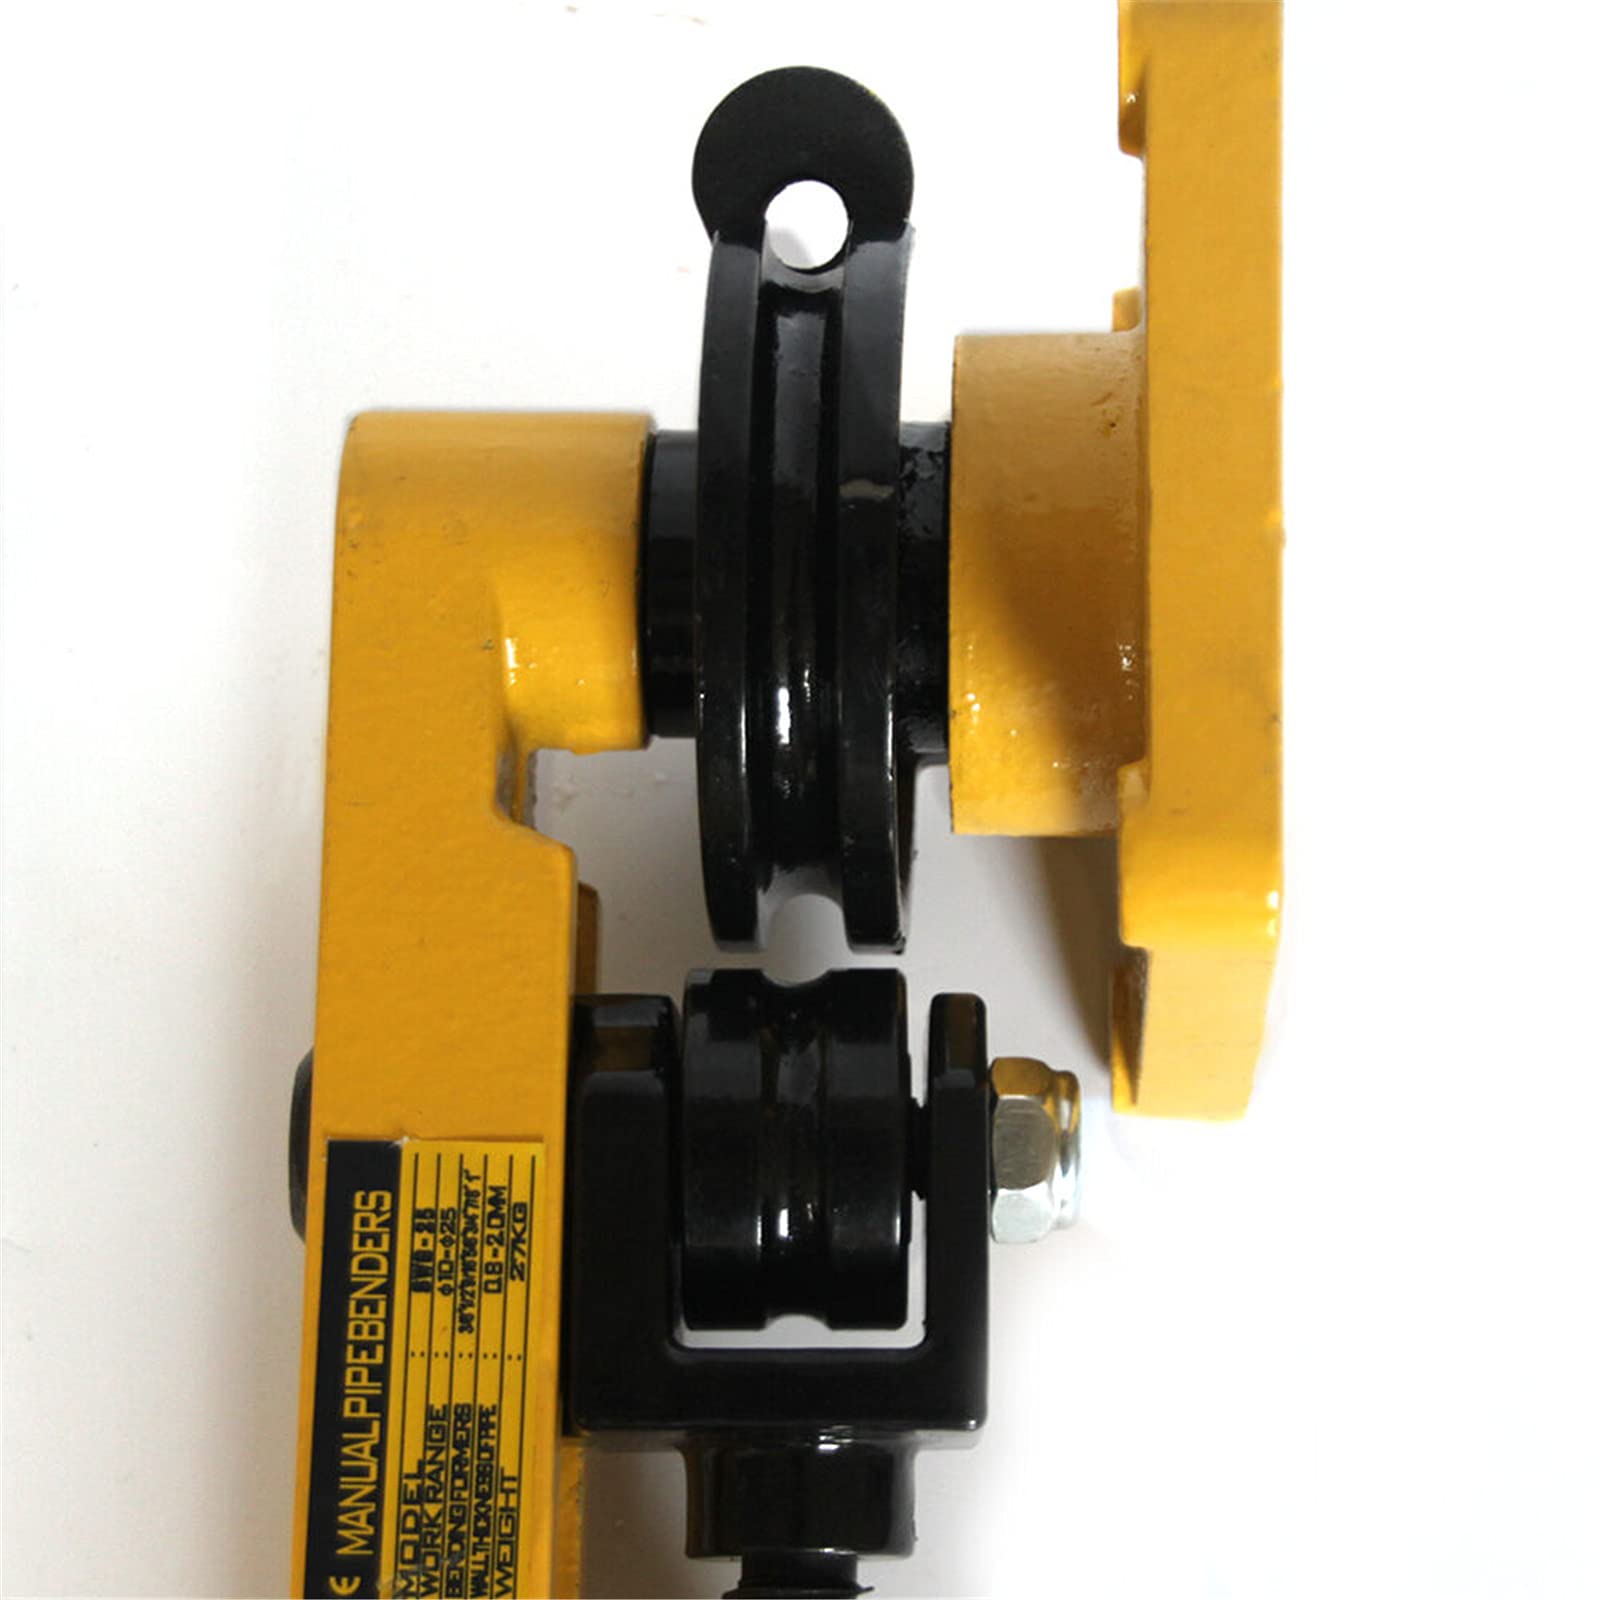 Handrohrbieger Manual 10-25mm 3/8"- 1" Pipe Tube Bender kit 